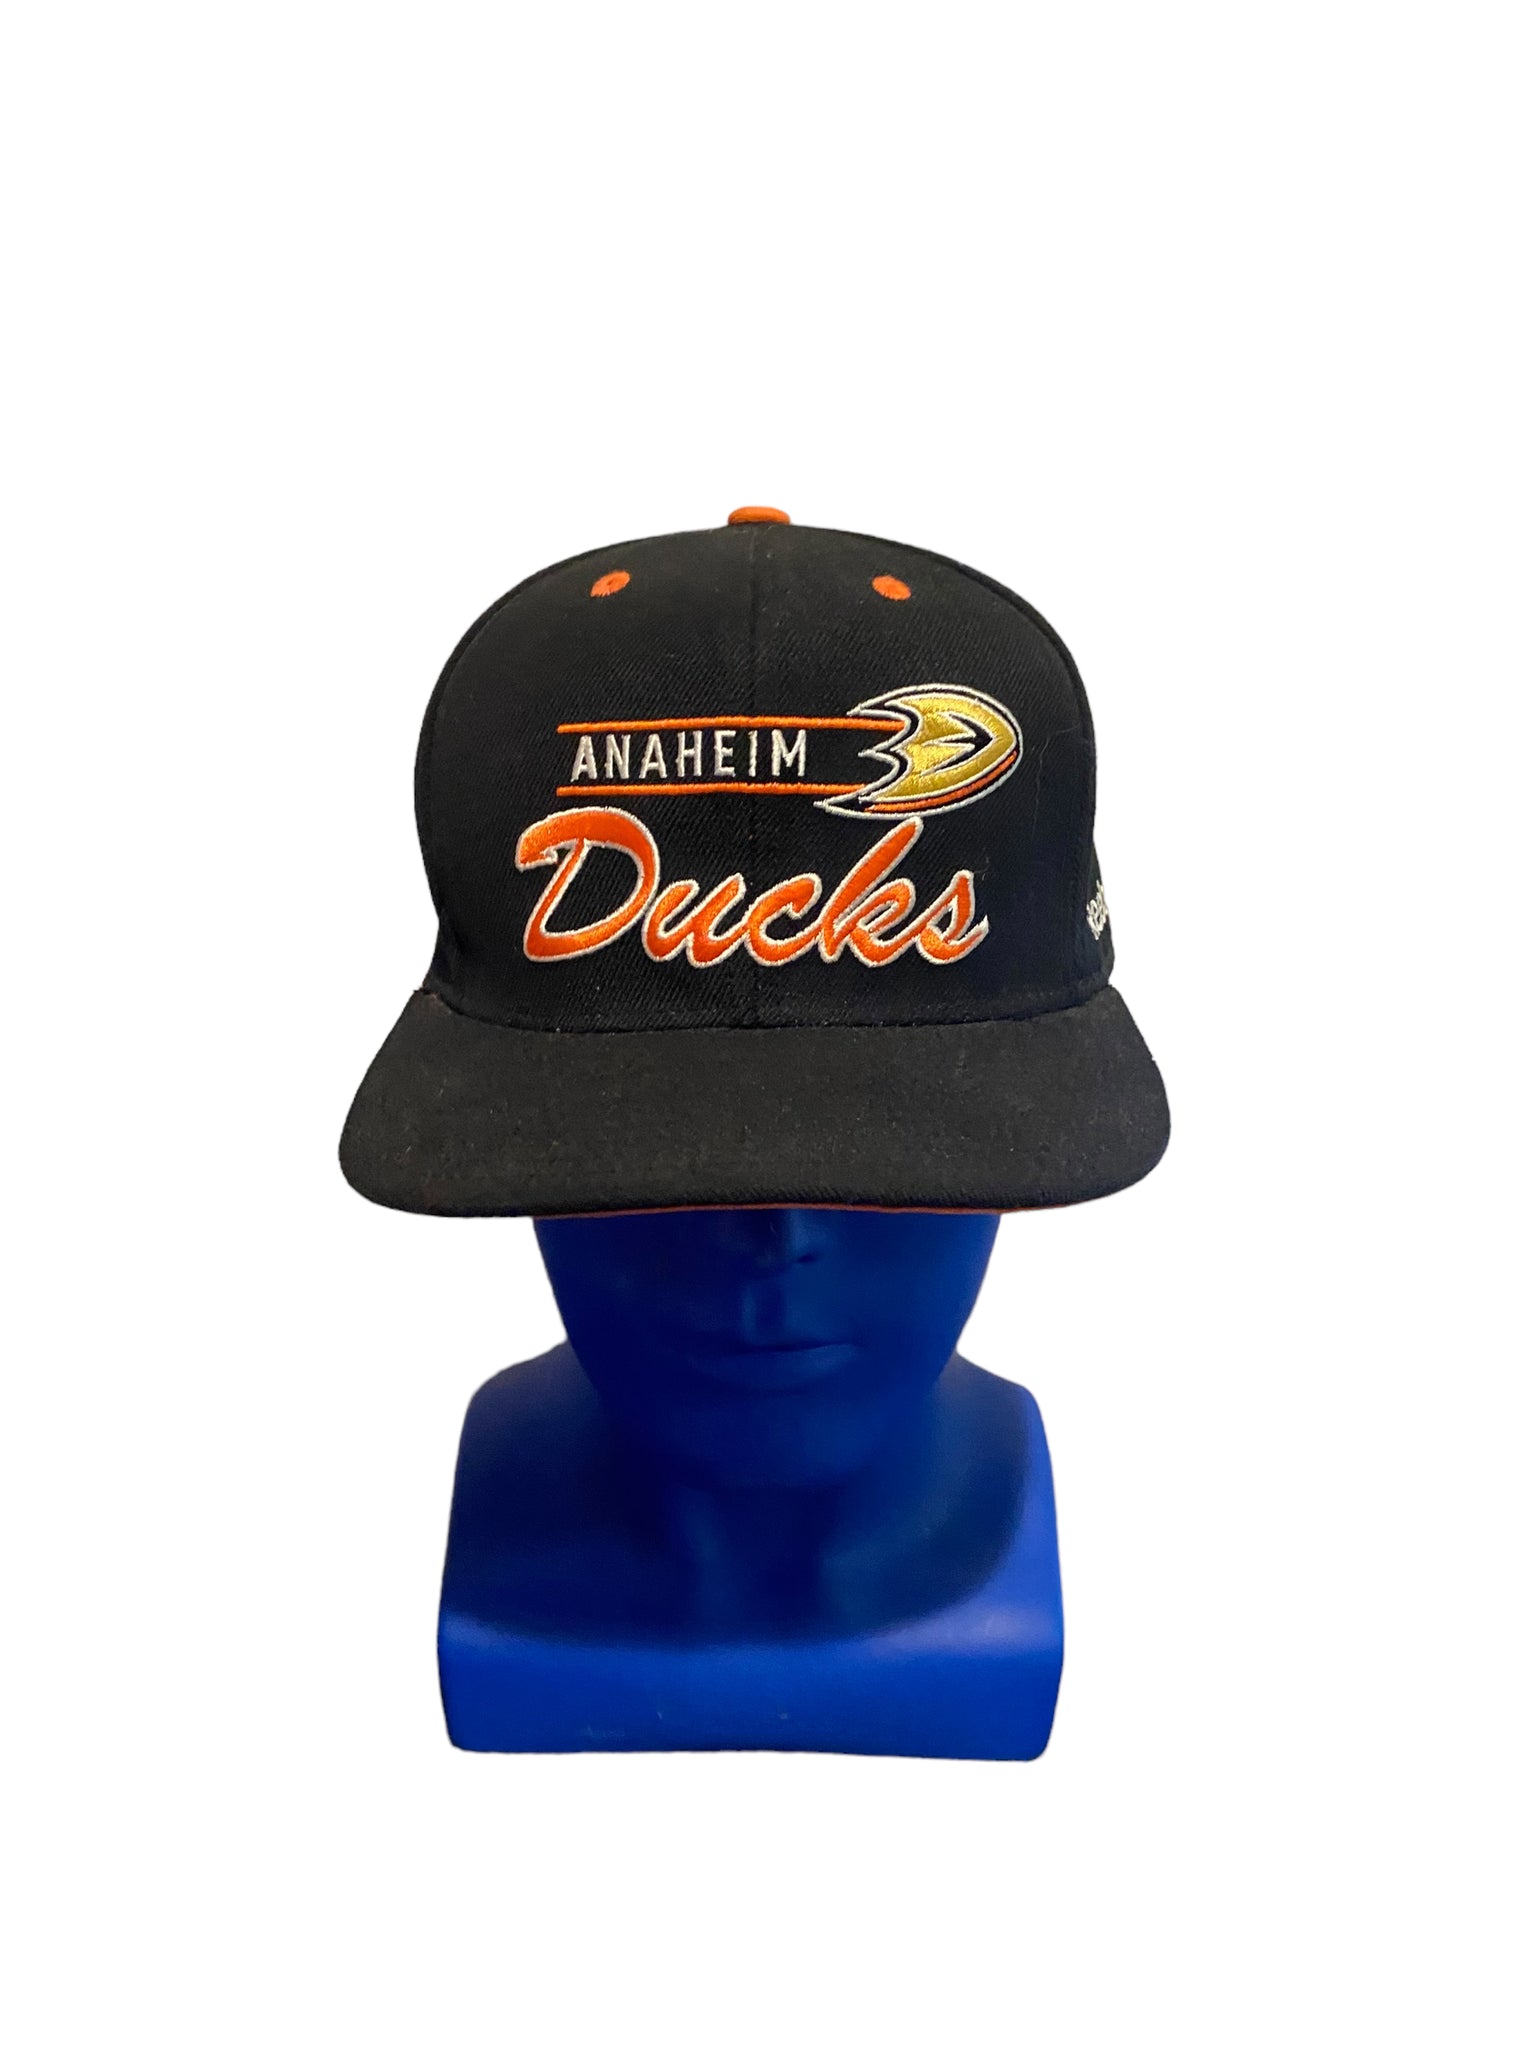 reebok anaheim ducks embroidered script and logo snapback hat